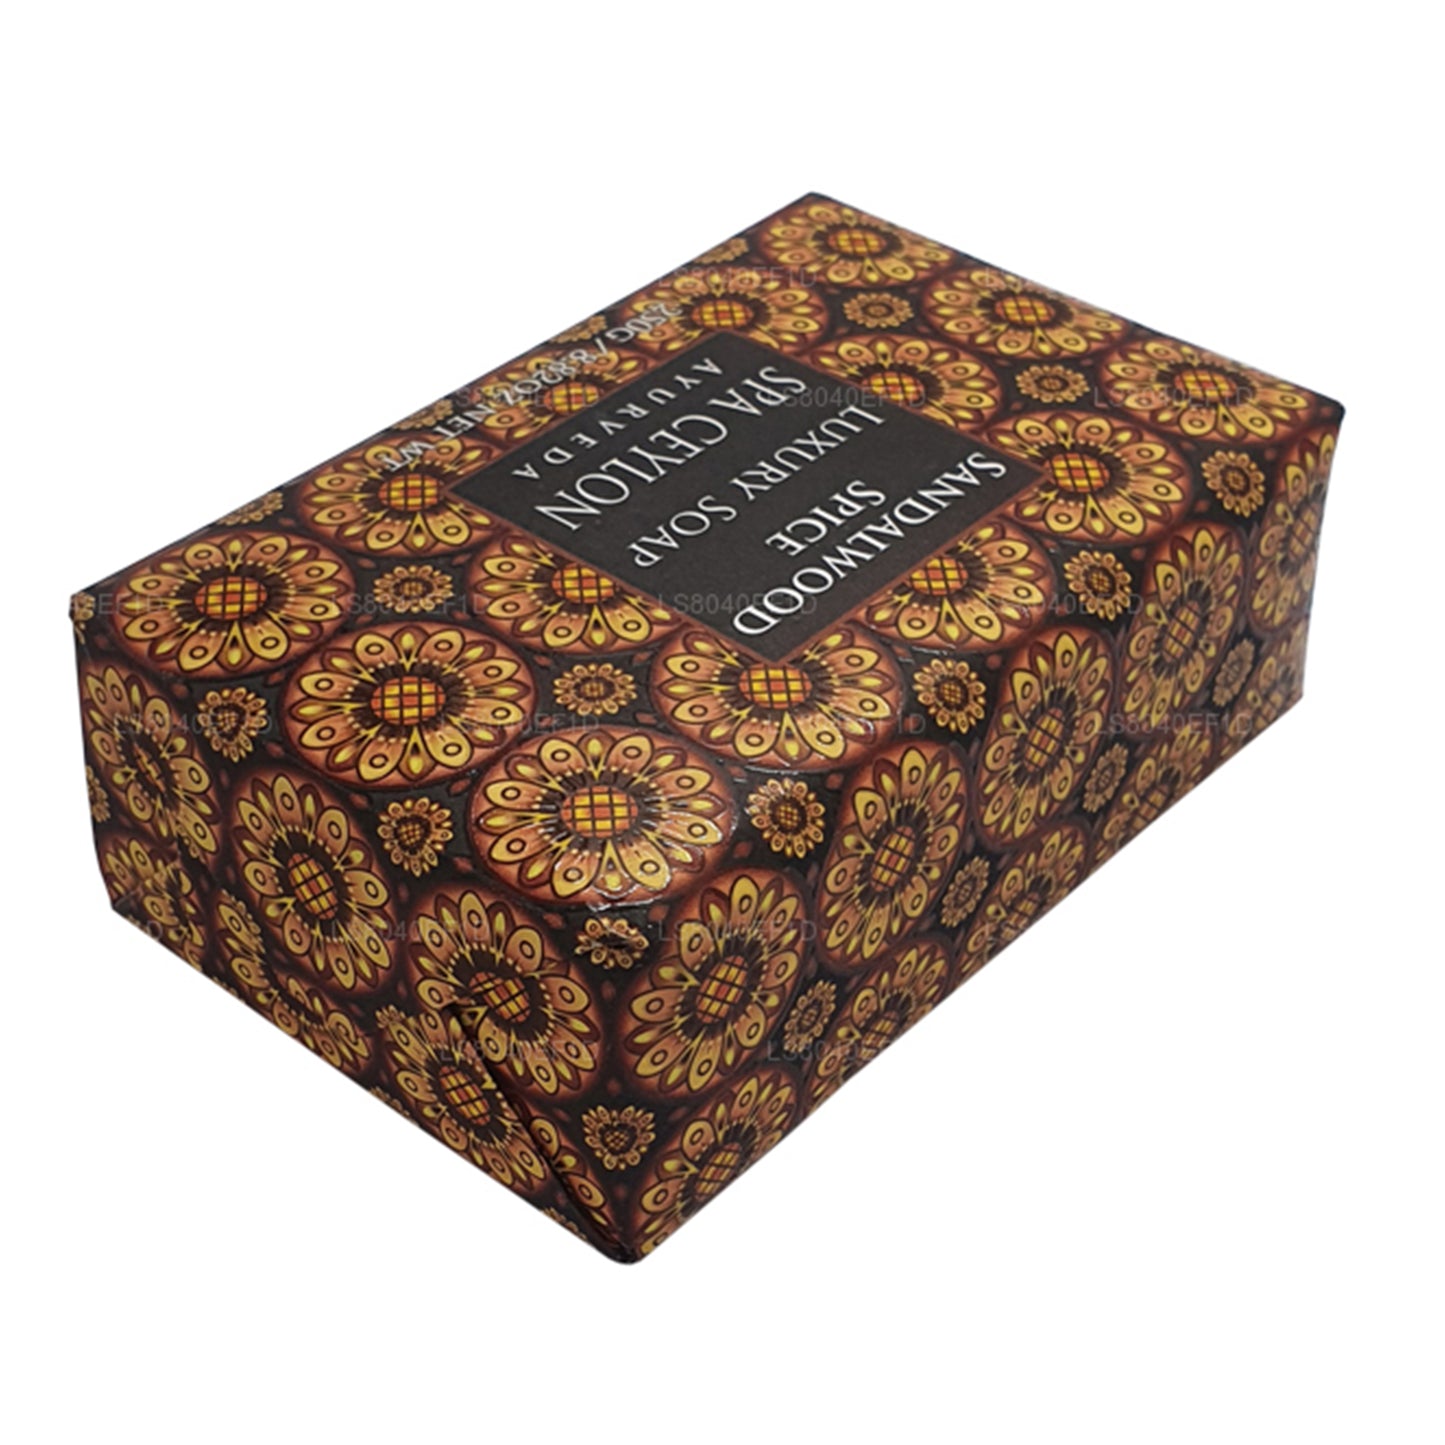 Savon de luxe Spa Ceylon Sandalwood Spice (250 g)